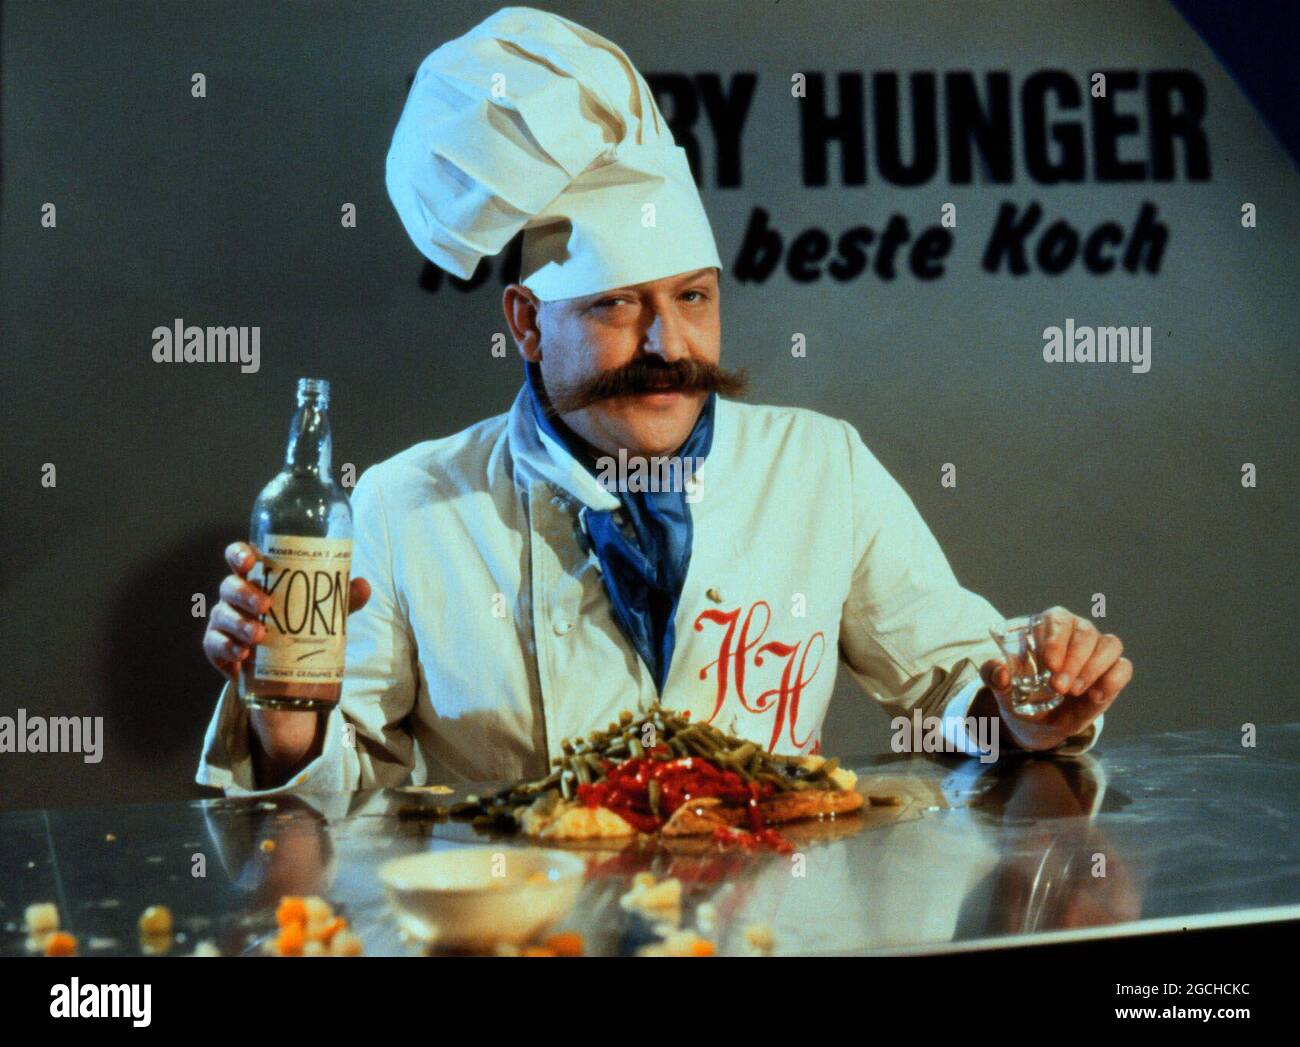 Voll daneben, ARD TV Comedy, 1990, Dieter Krebs in dem Sketch: Chefkoch Harry Hunger. Voll daneben, ARD TV Comedy, 1990, Dieter Krebs come Chef Harry Hunger. Foto Stock